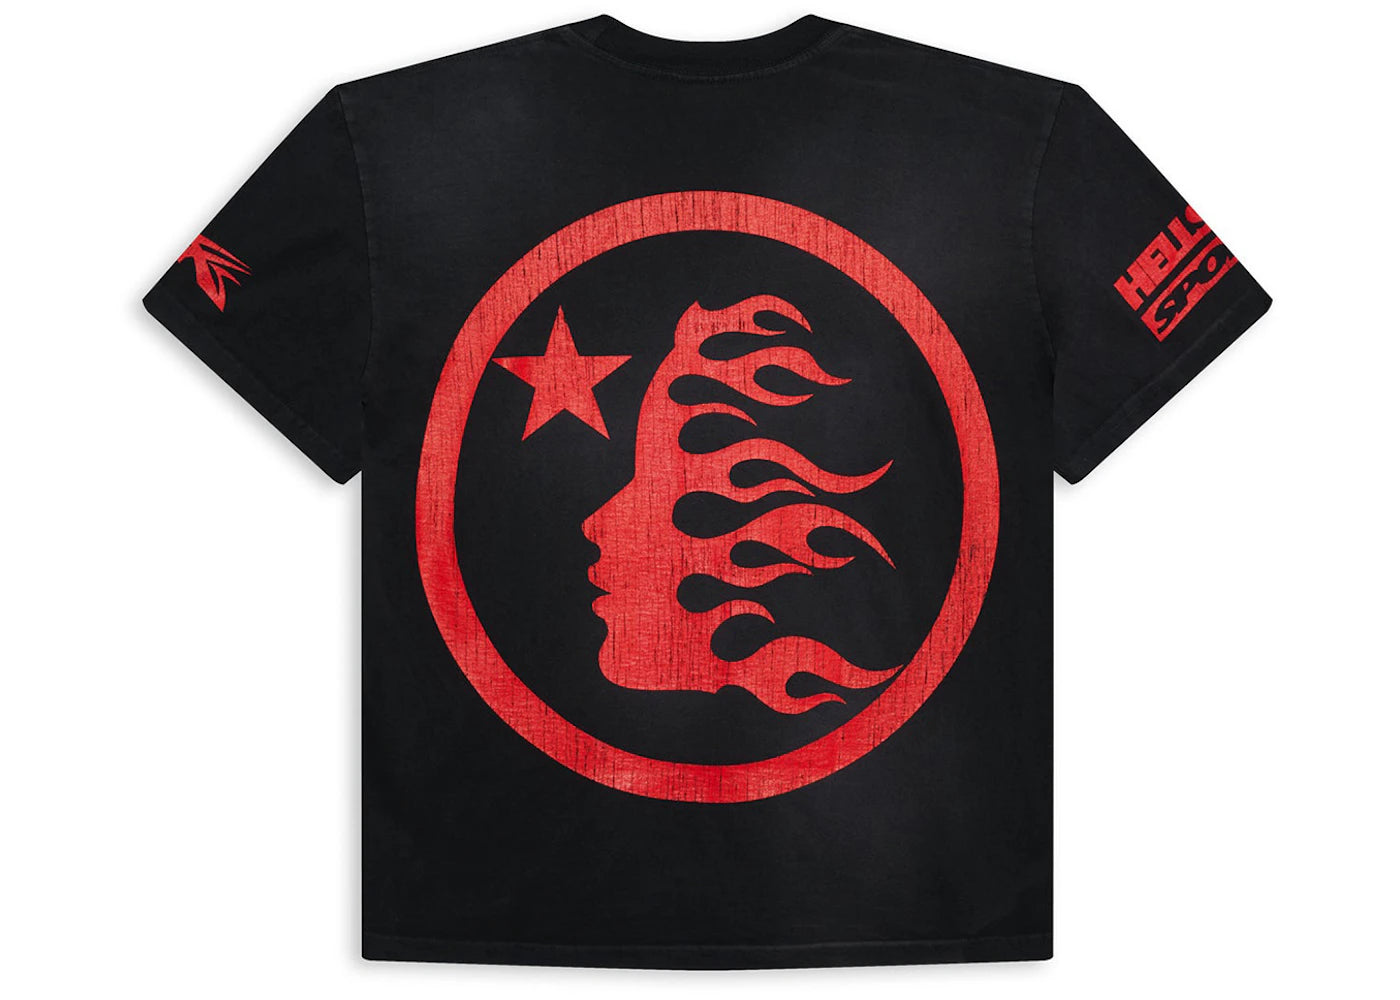 Hellstar Sports Beat Us! Red Black T-Shirt